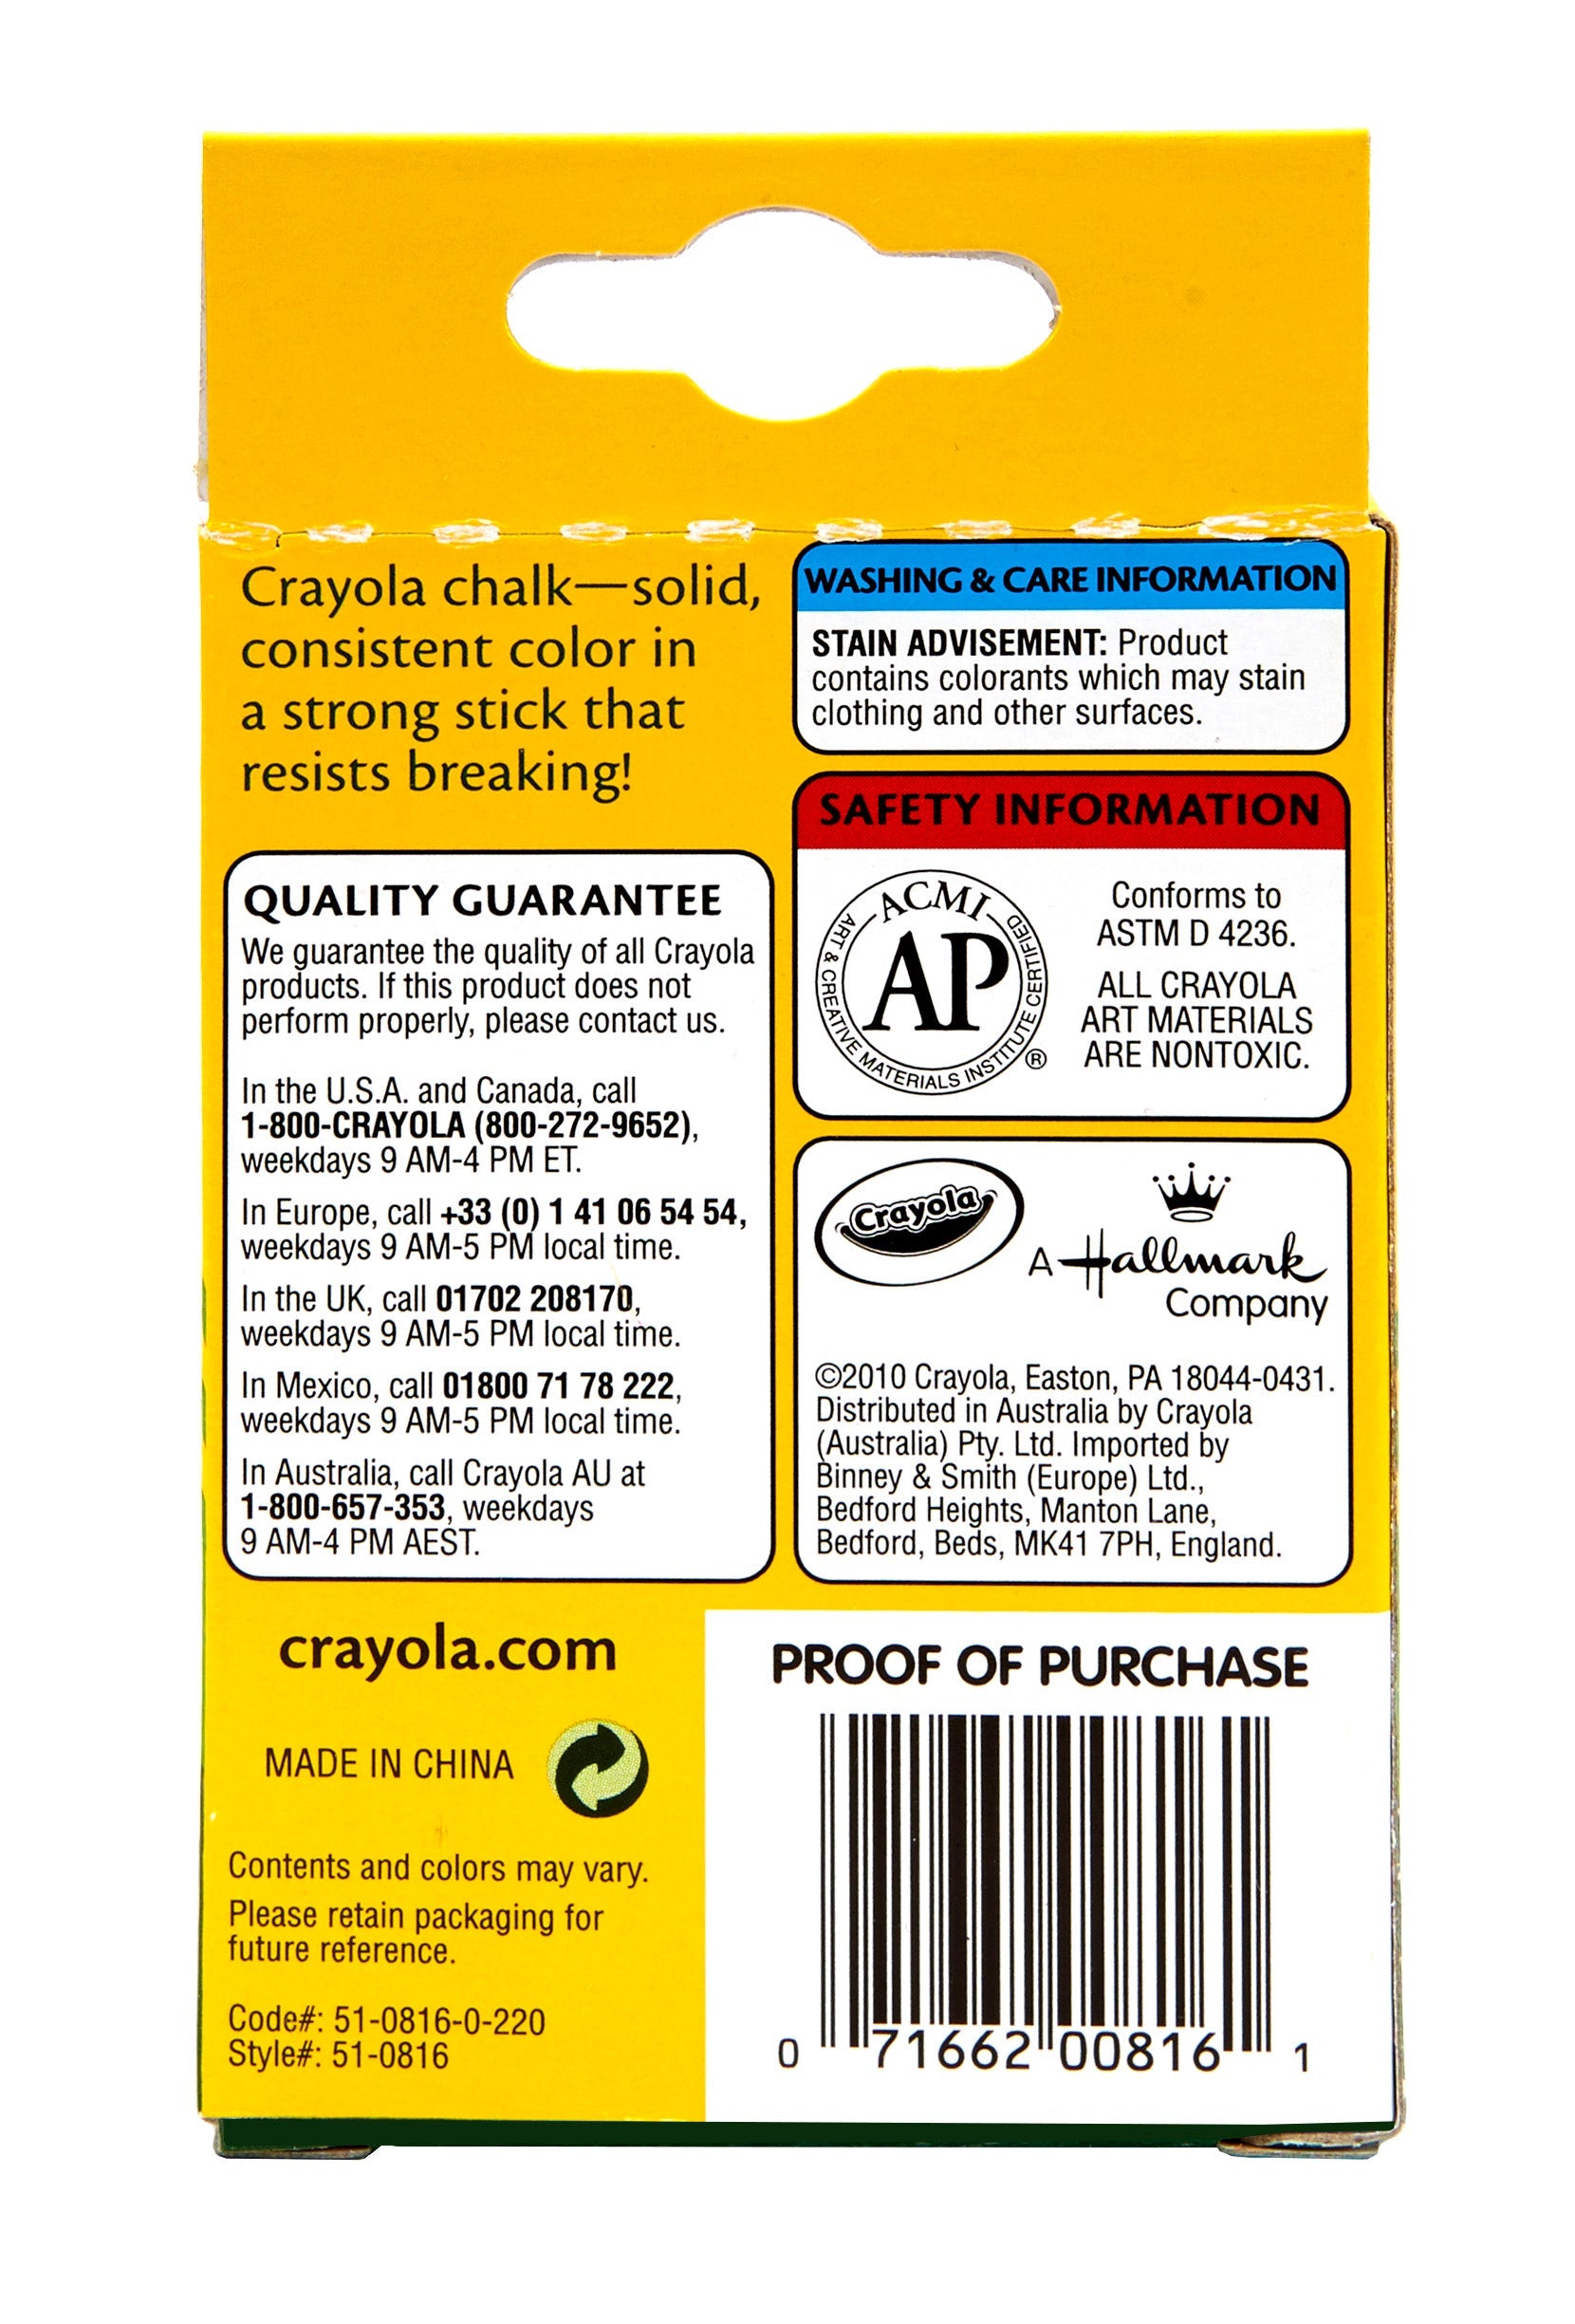 Crayola® Multi-Colored Chalkboard Chalk - 12 pack